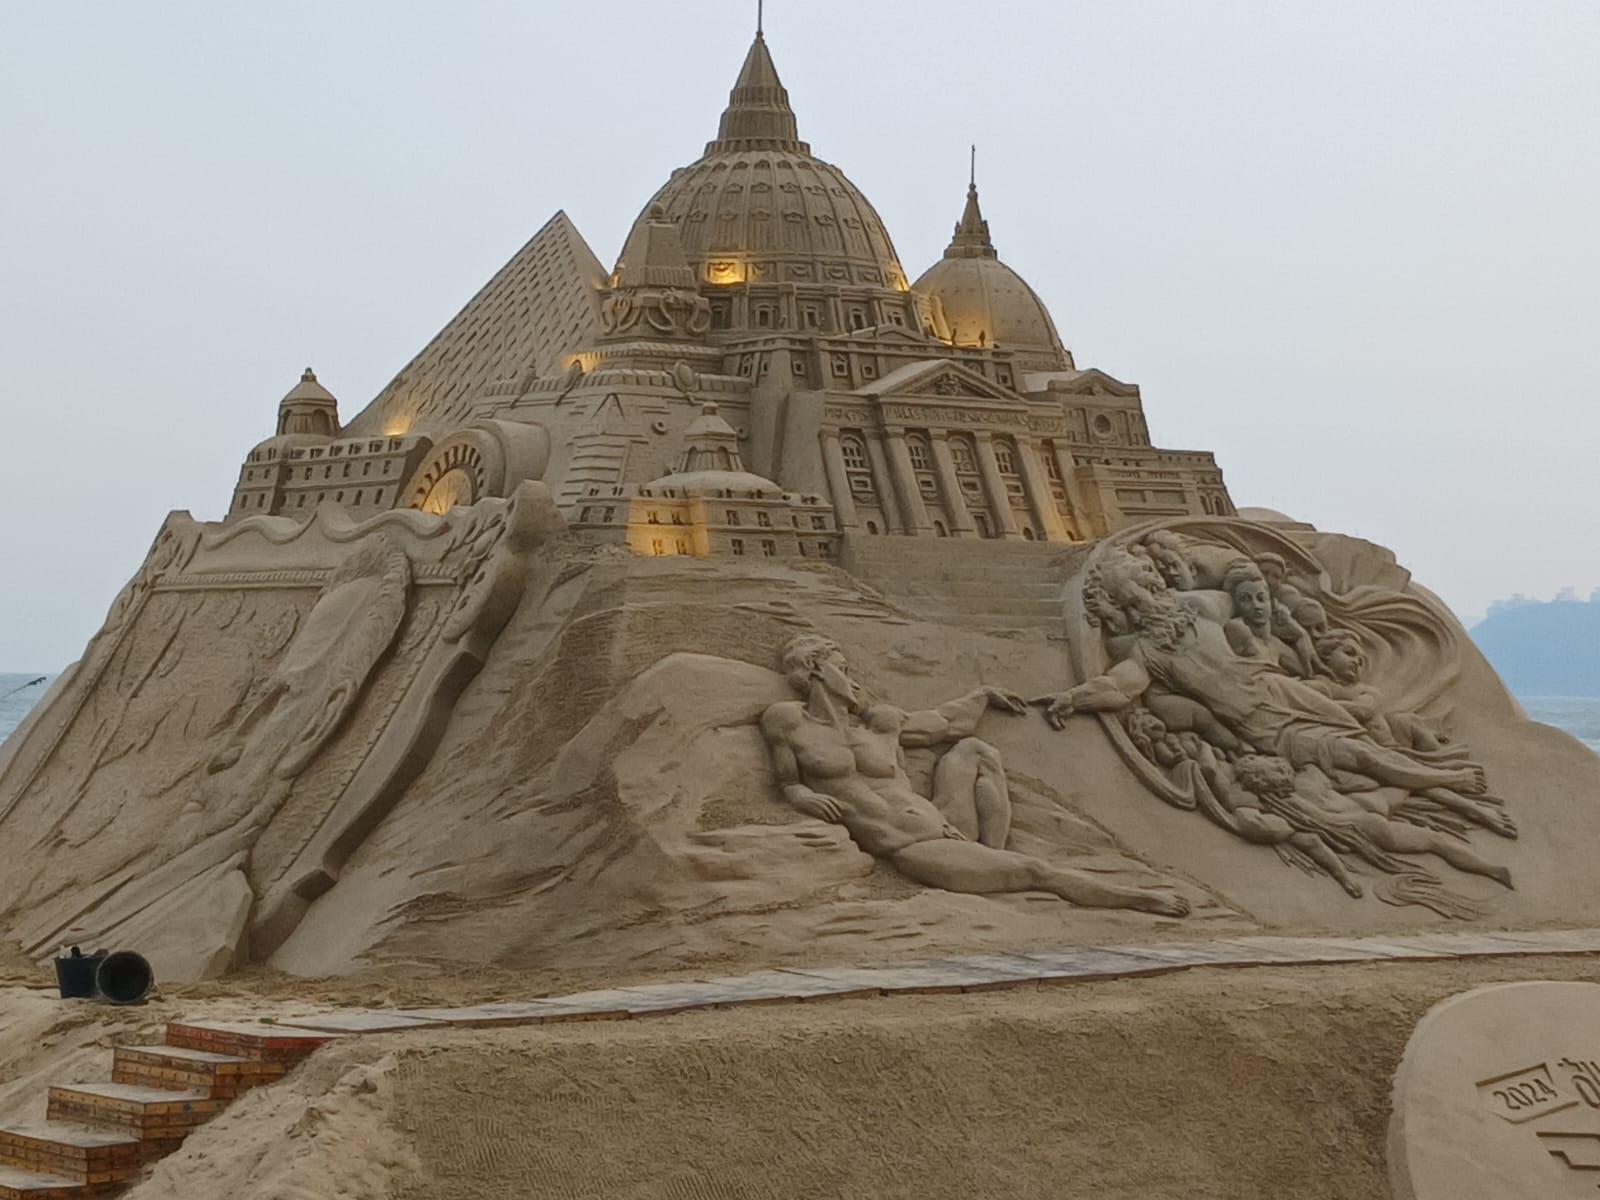 Star Wars-themed sand sculpture at Haeundae Beach in Busan on Monday. Photo By: Clara, South Korea